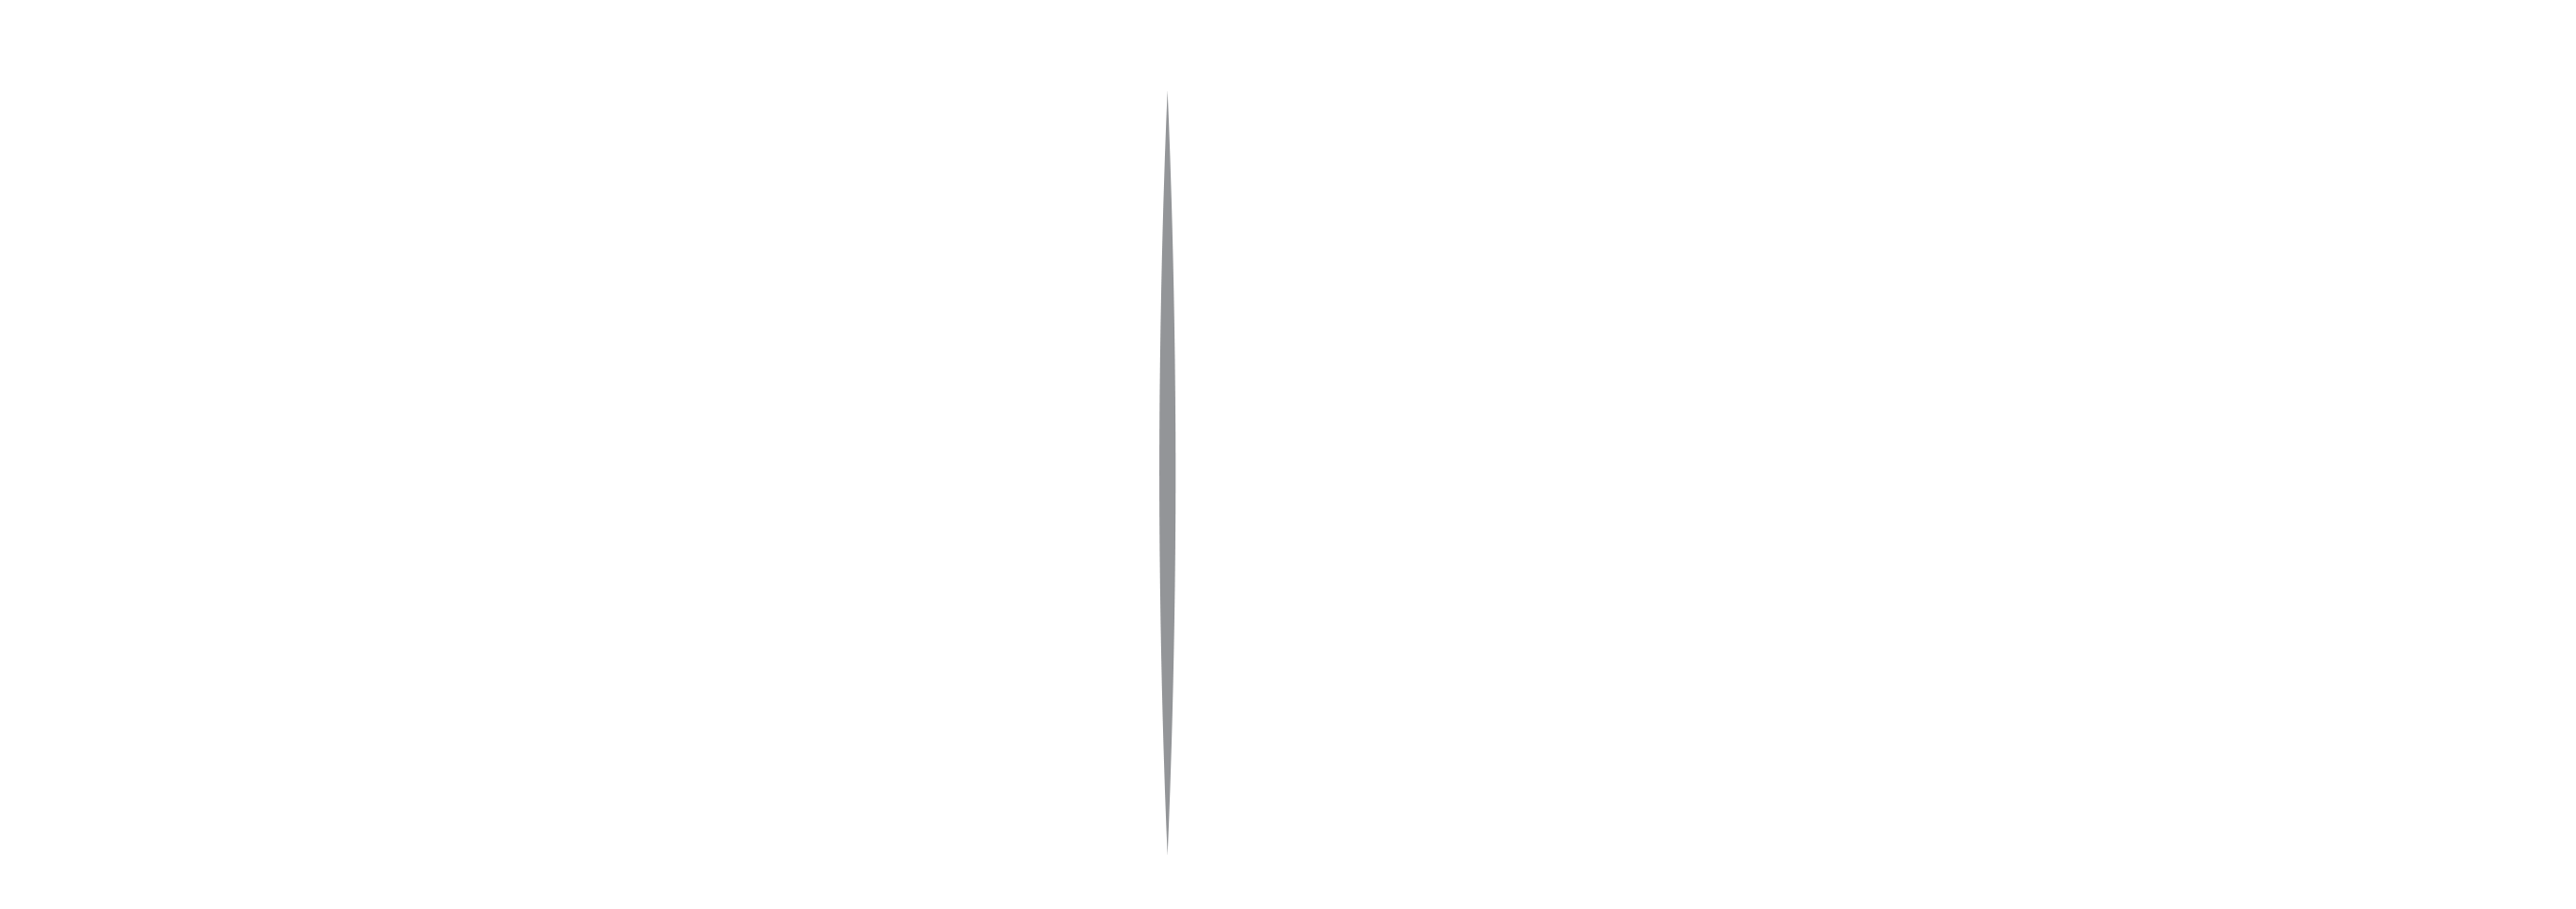 Fozi Dwork & Modafferi, LLP Logo